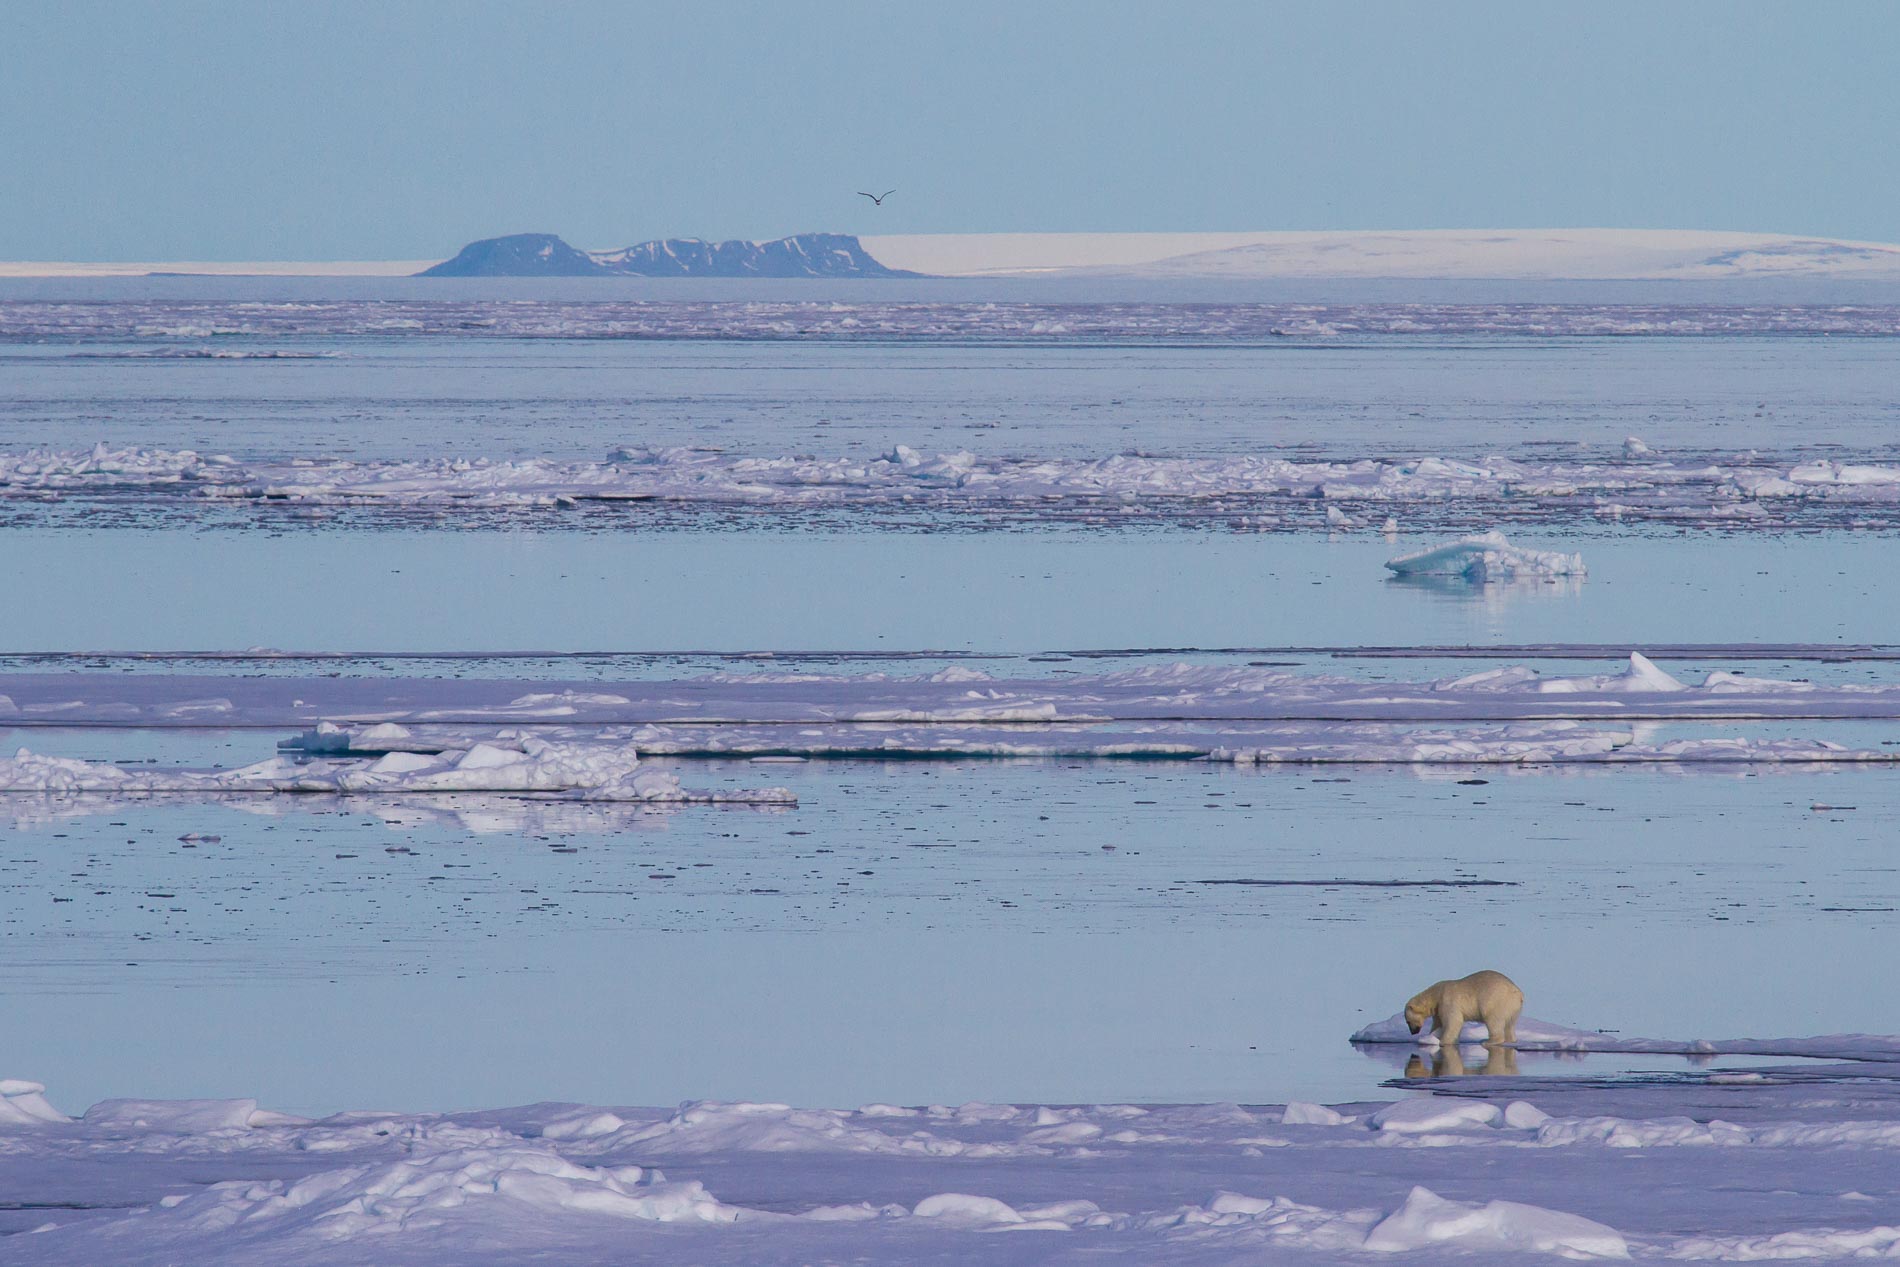 Photograph of a polar bear looking at its reflection